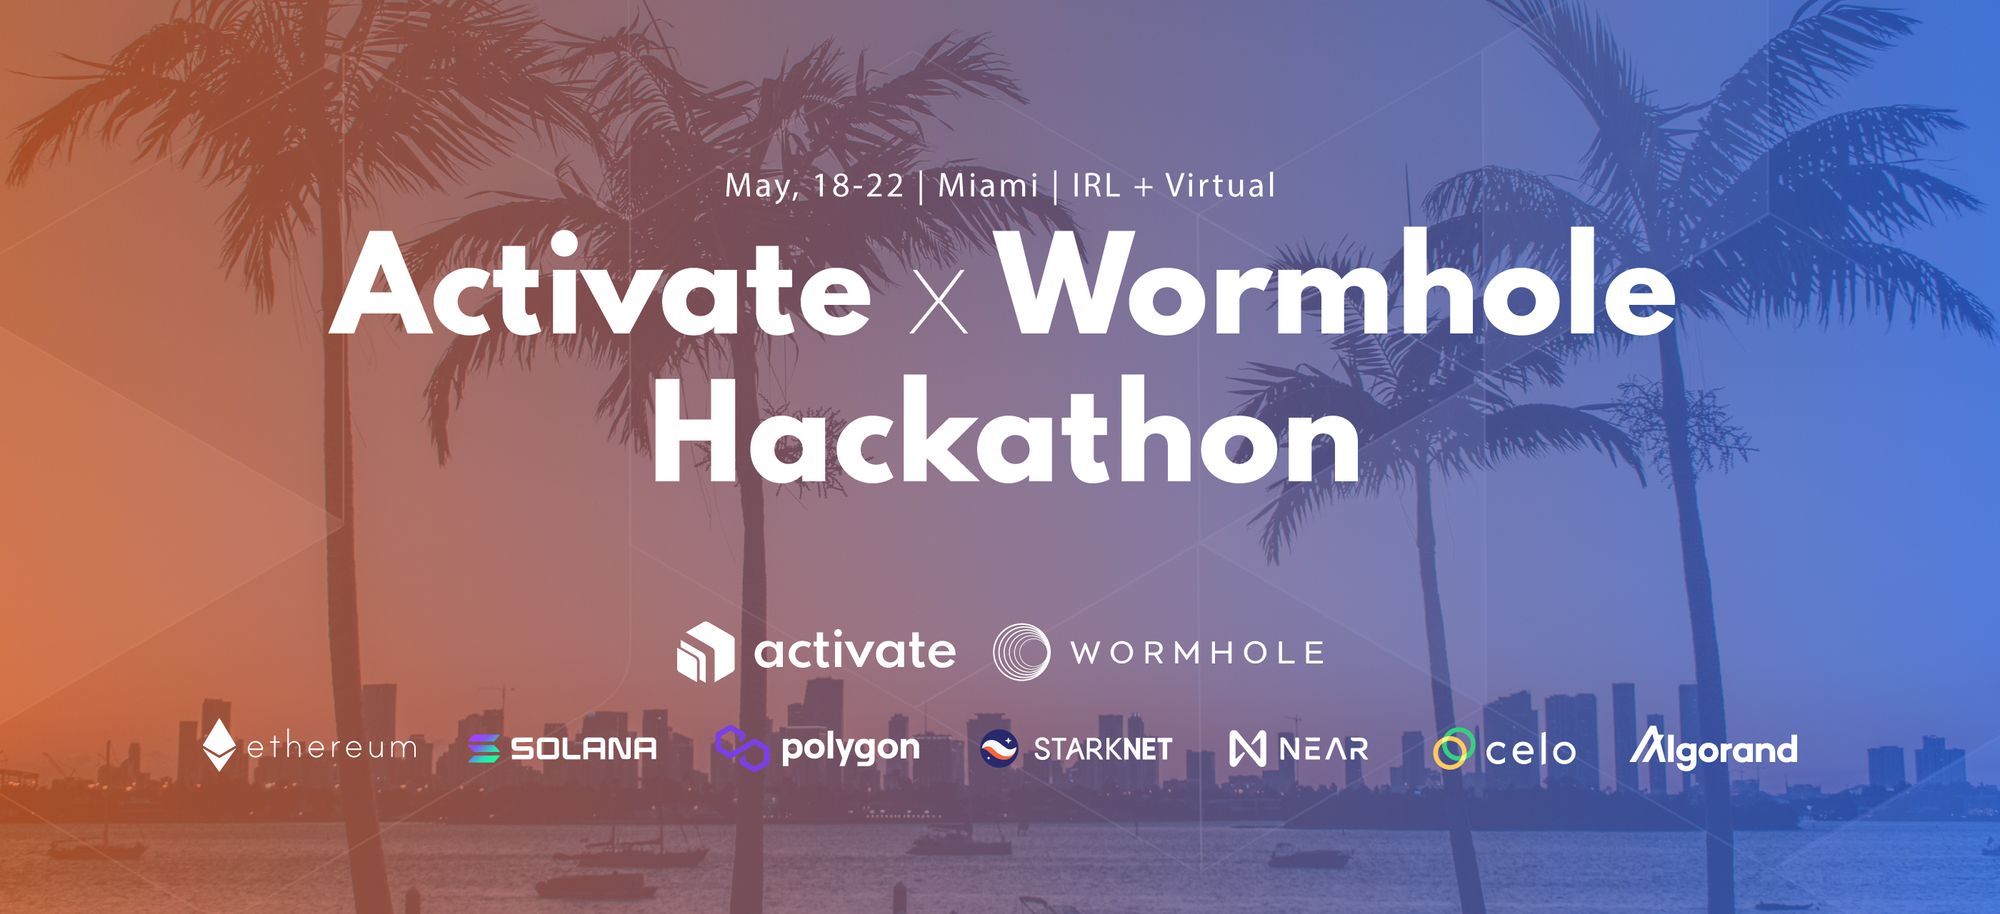 Activate x Wormhole Hackathon in Miami Application Guide